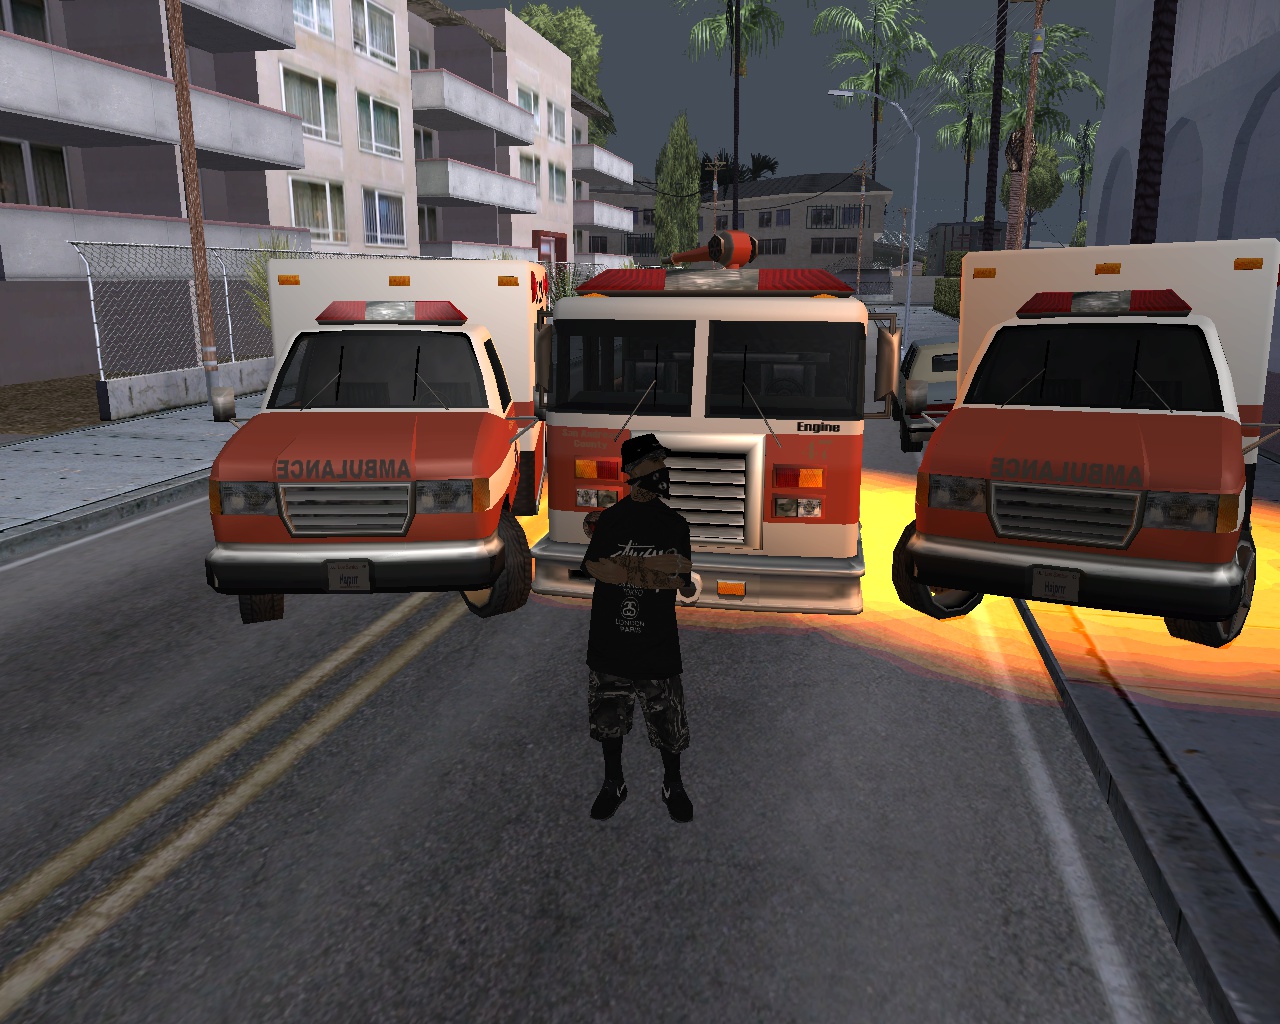 My spec carpark! 2x Ambulance (222) and firetruck (222)